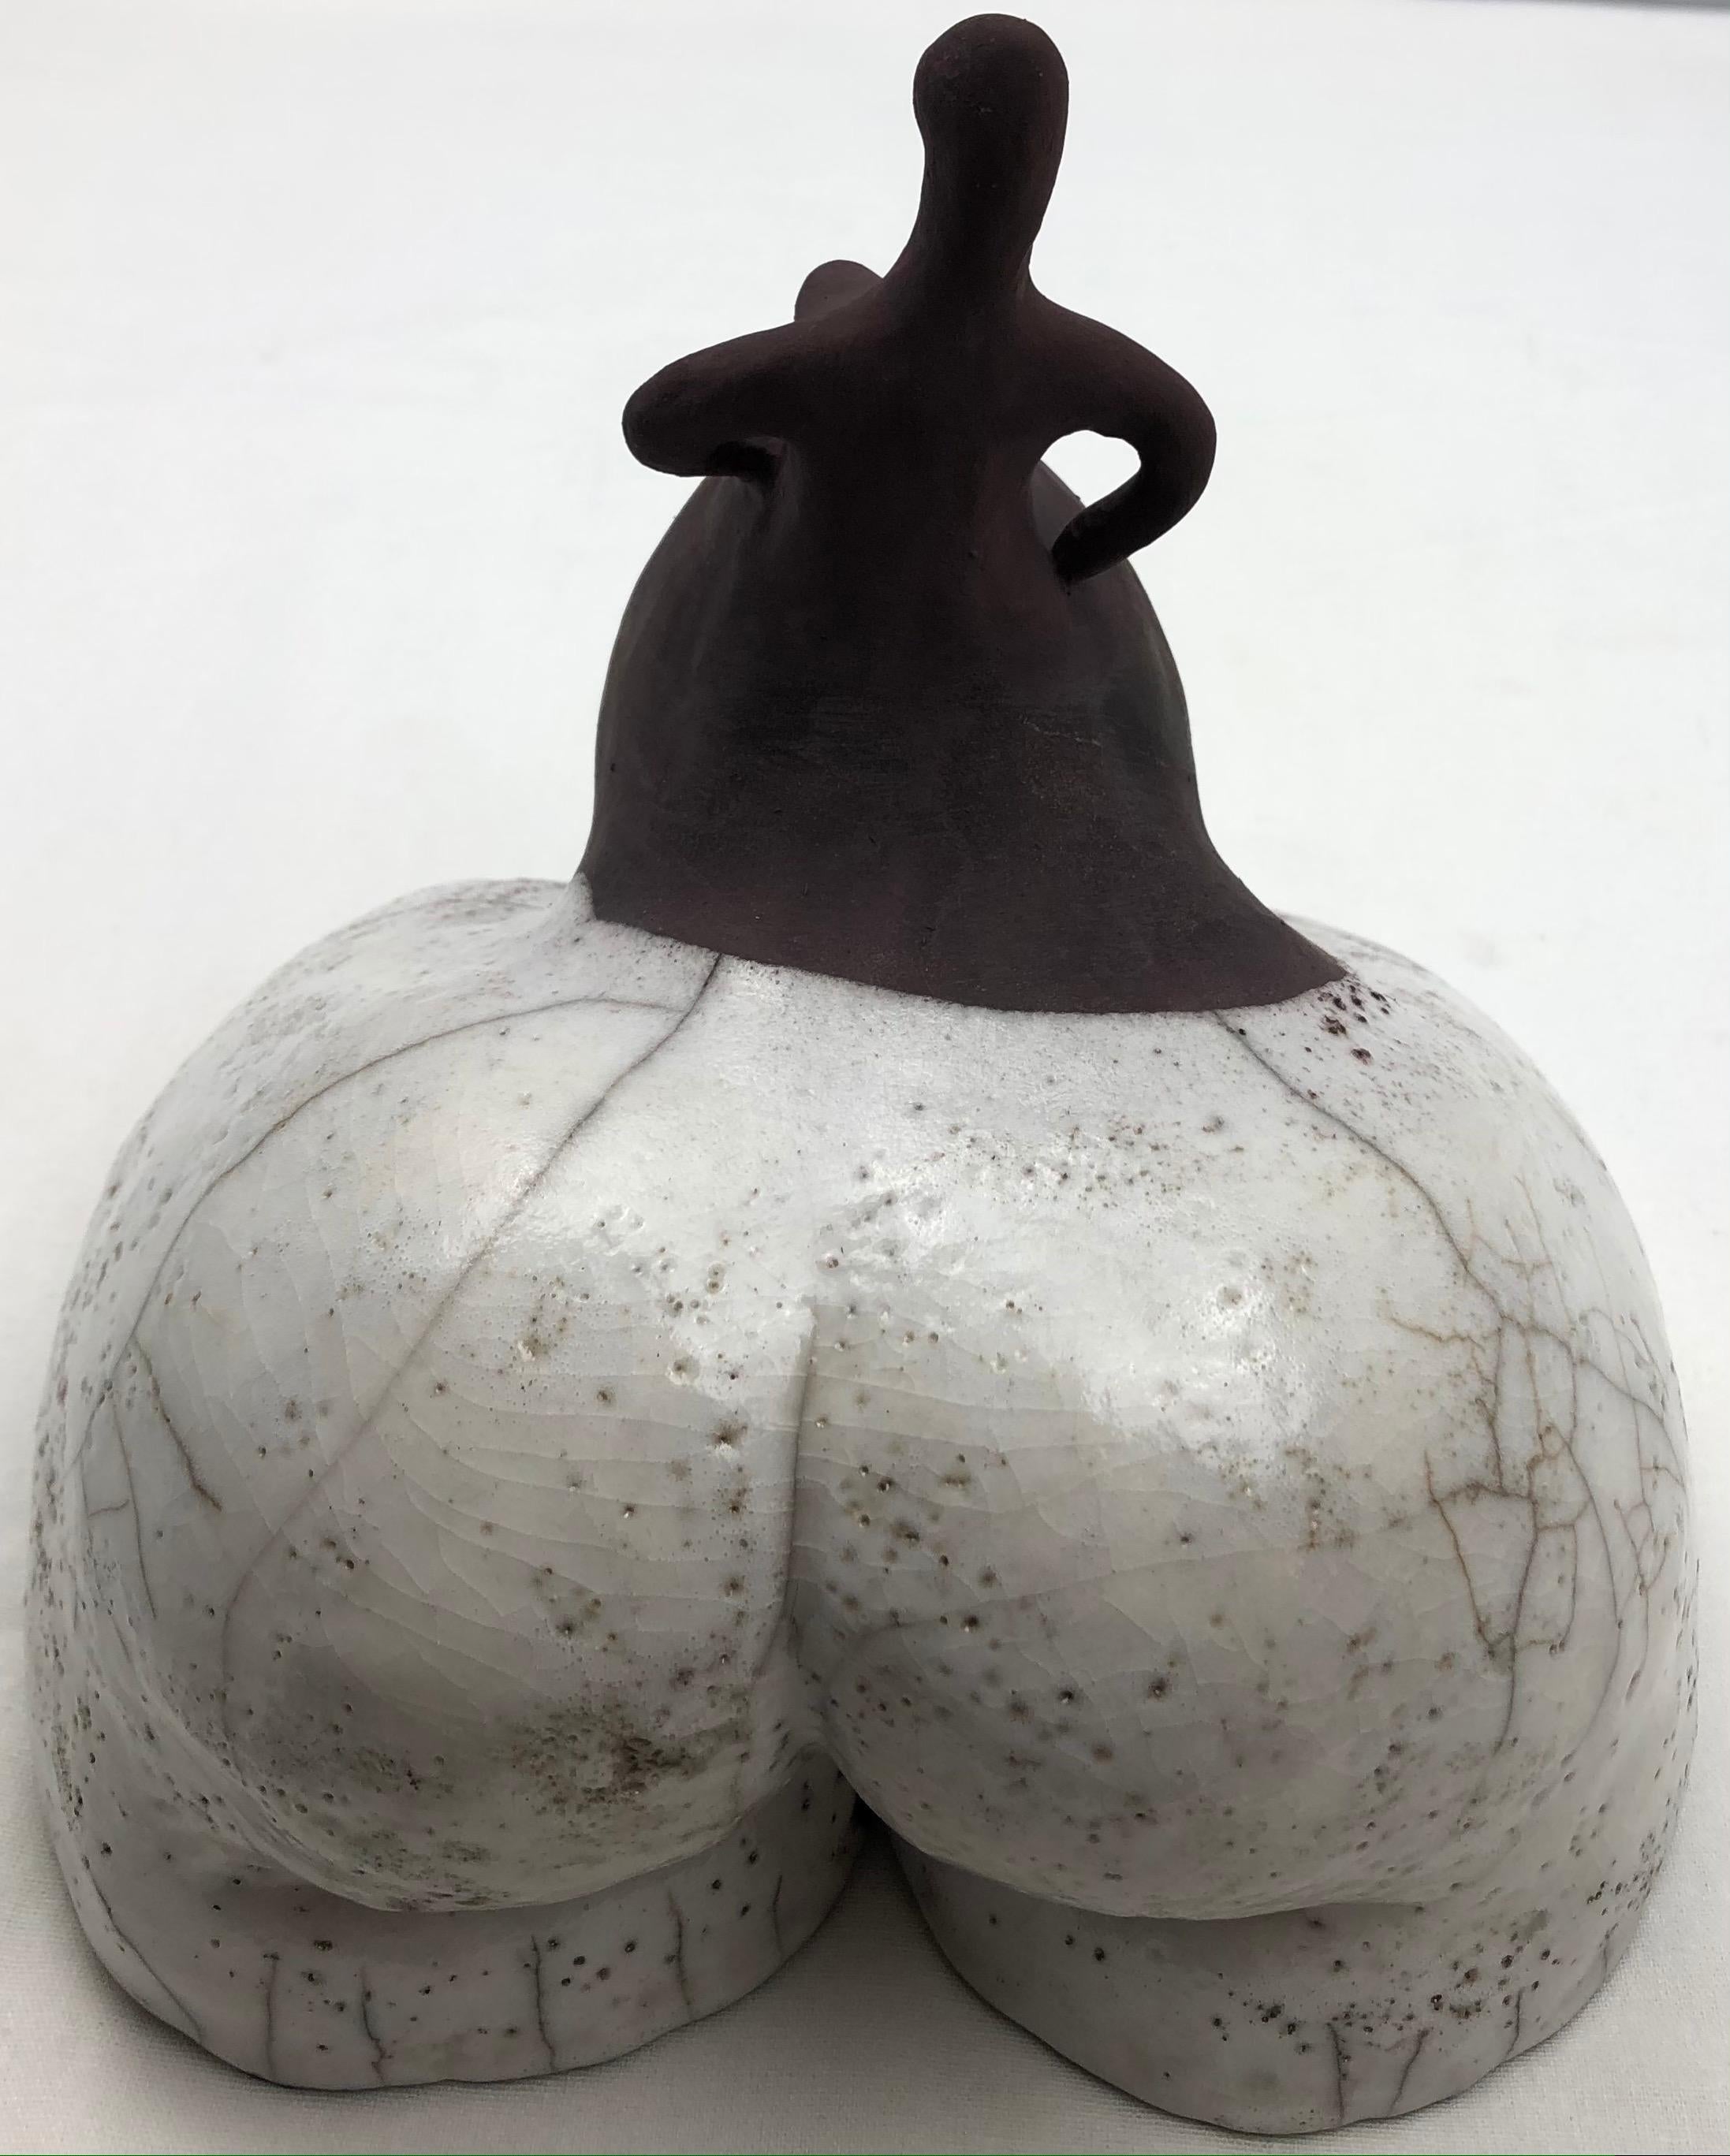 Raku Fired Ceramic Sculpture Nude Woman In Good Condition For Sale In Miami, FL